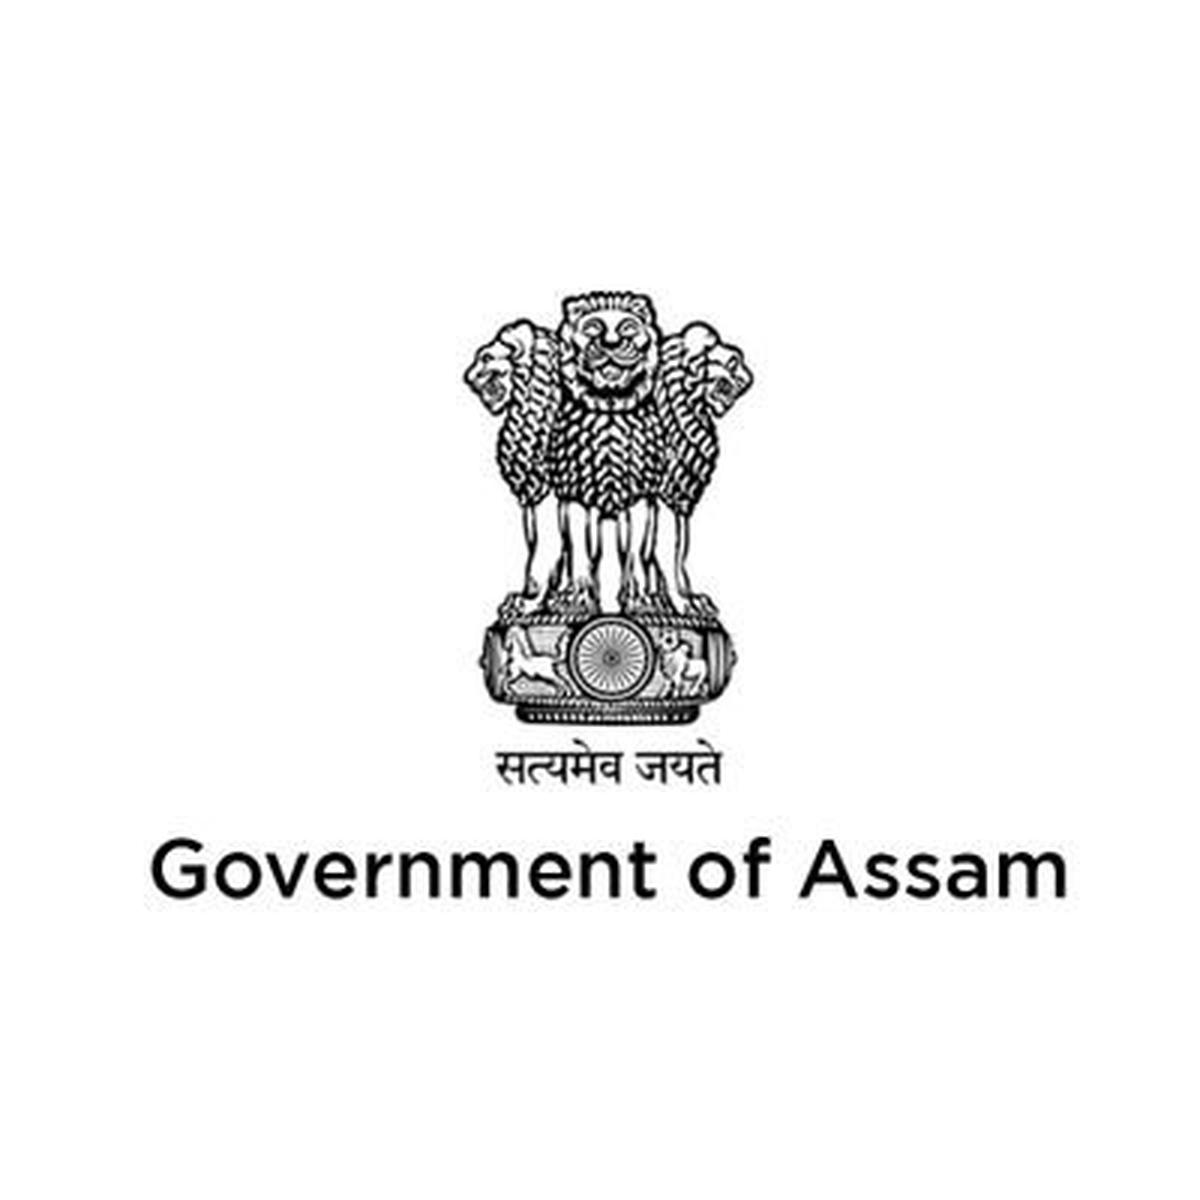 Assam Assembly Secretariat issues dress code for employees